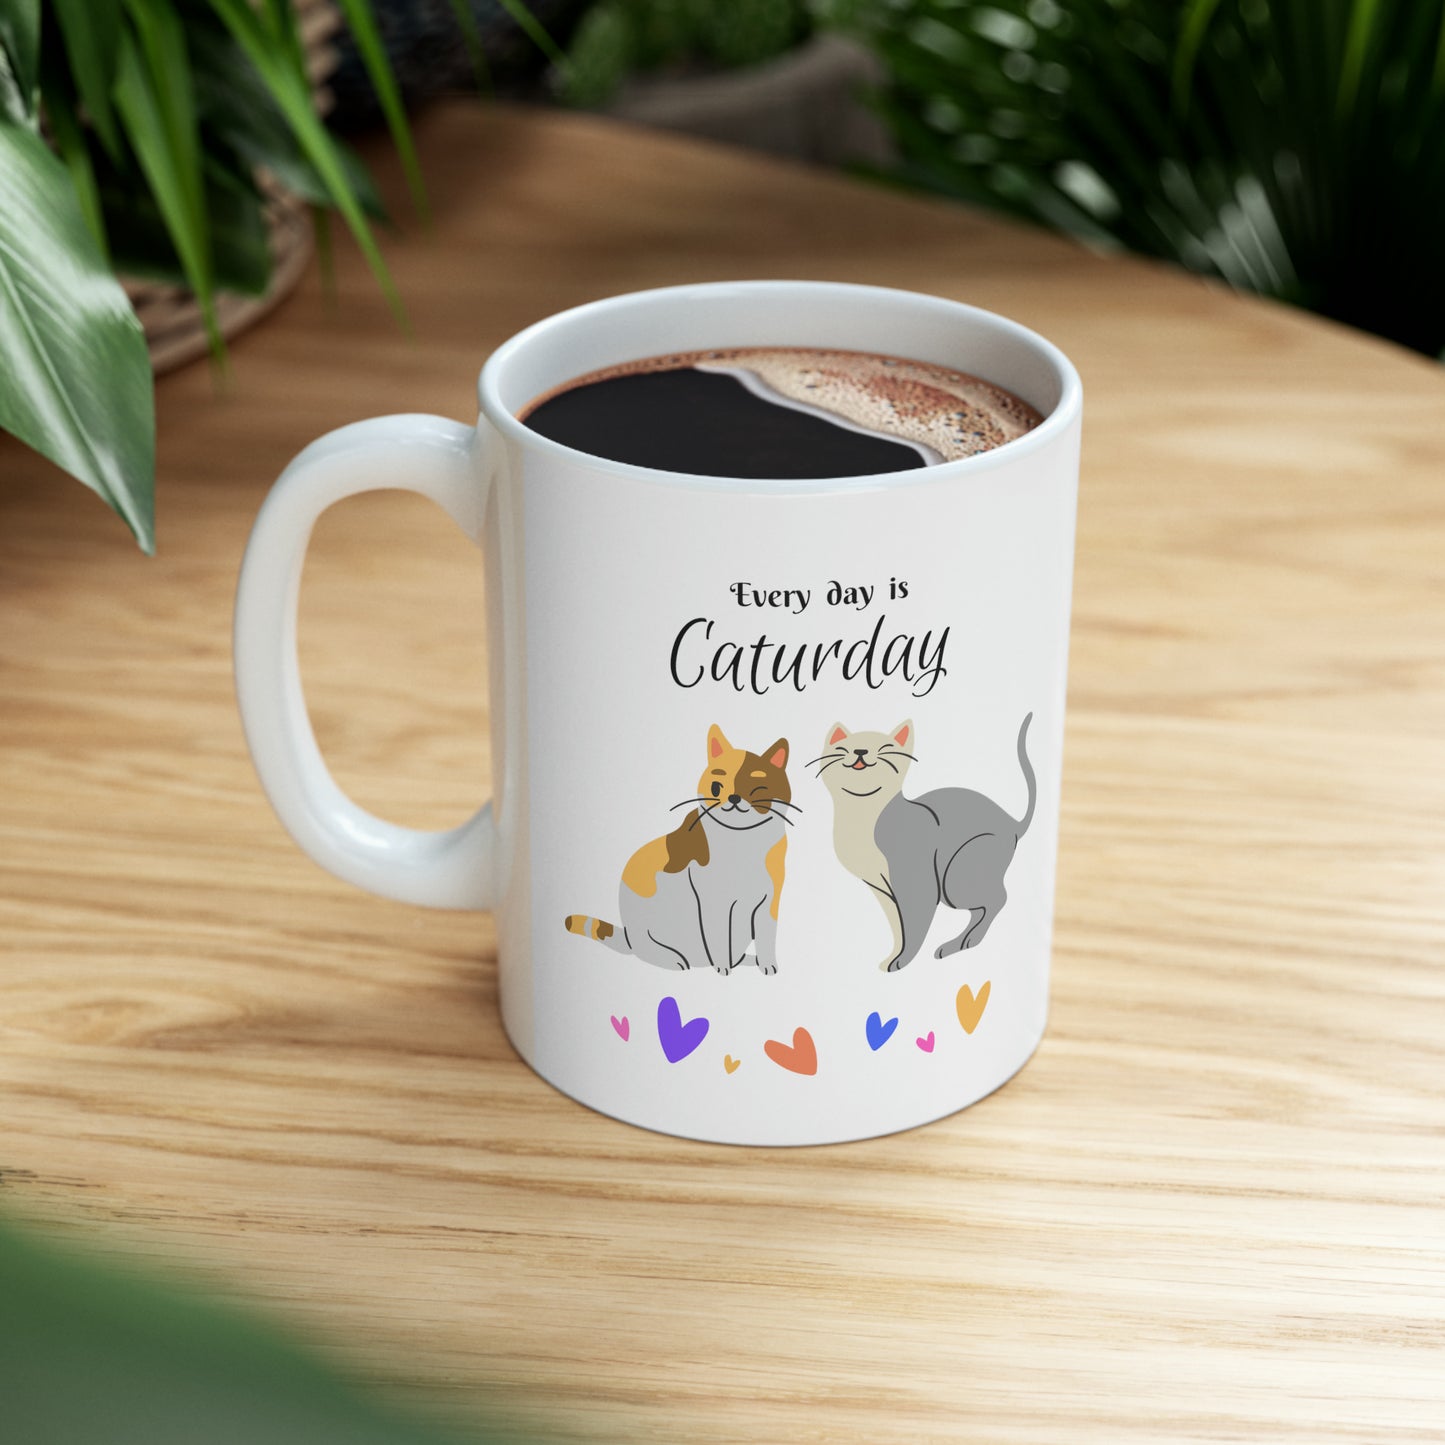 Cat Lady Mug - "Every Day is Caturday" - Ceramic -11oz